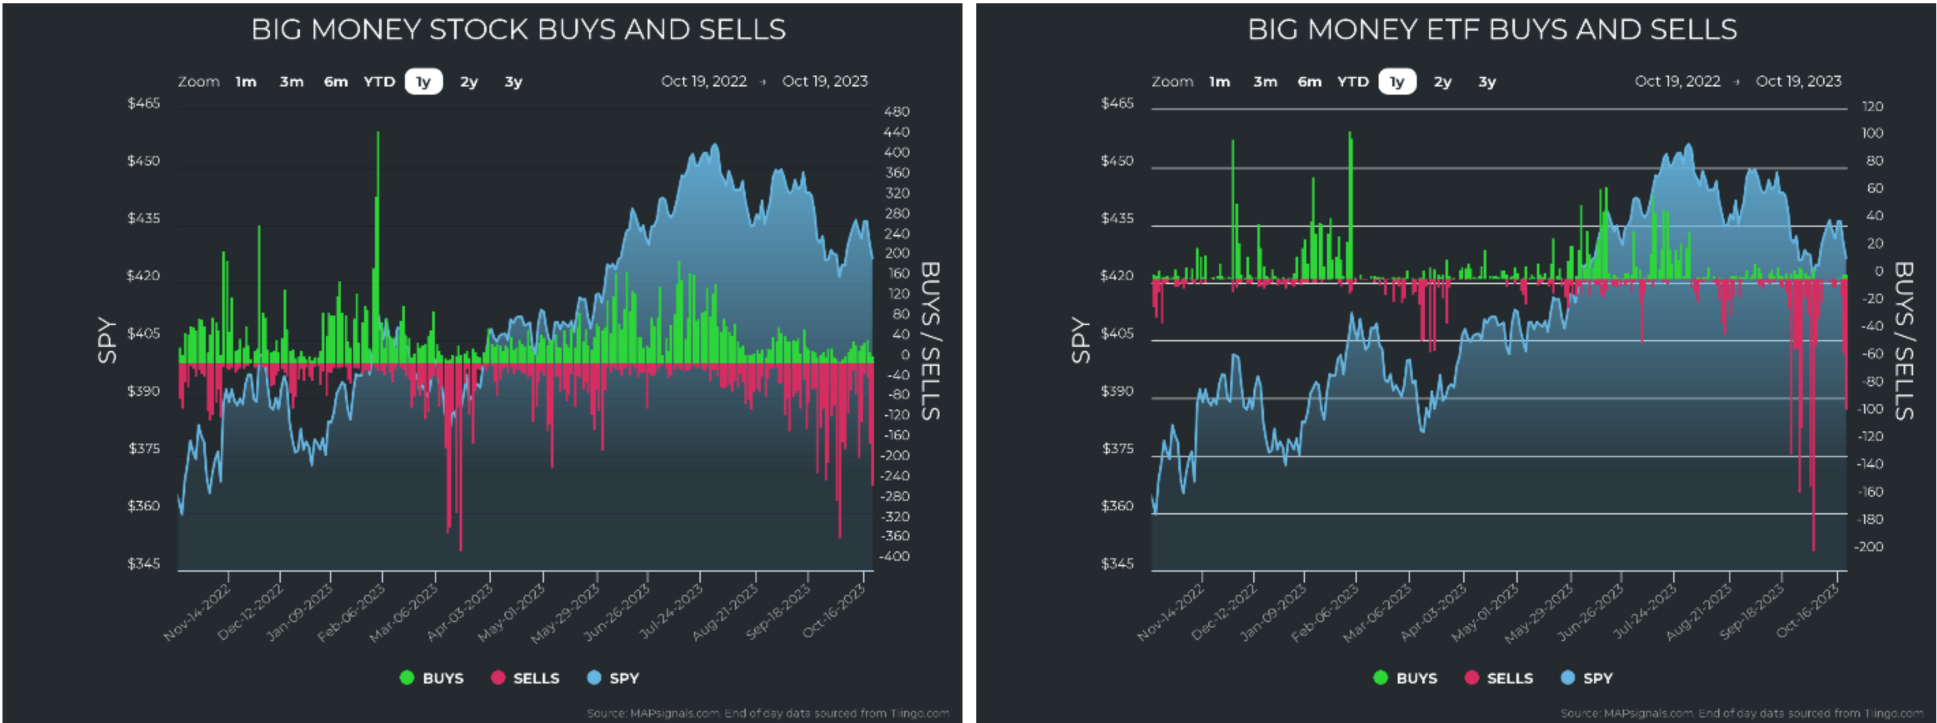 Big Money Buys Sells ETF Charts